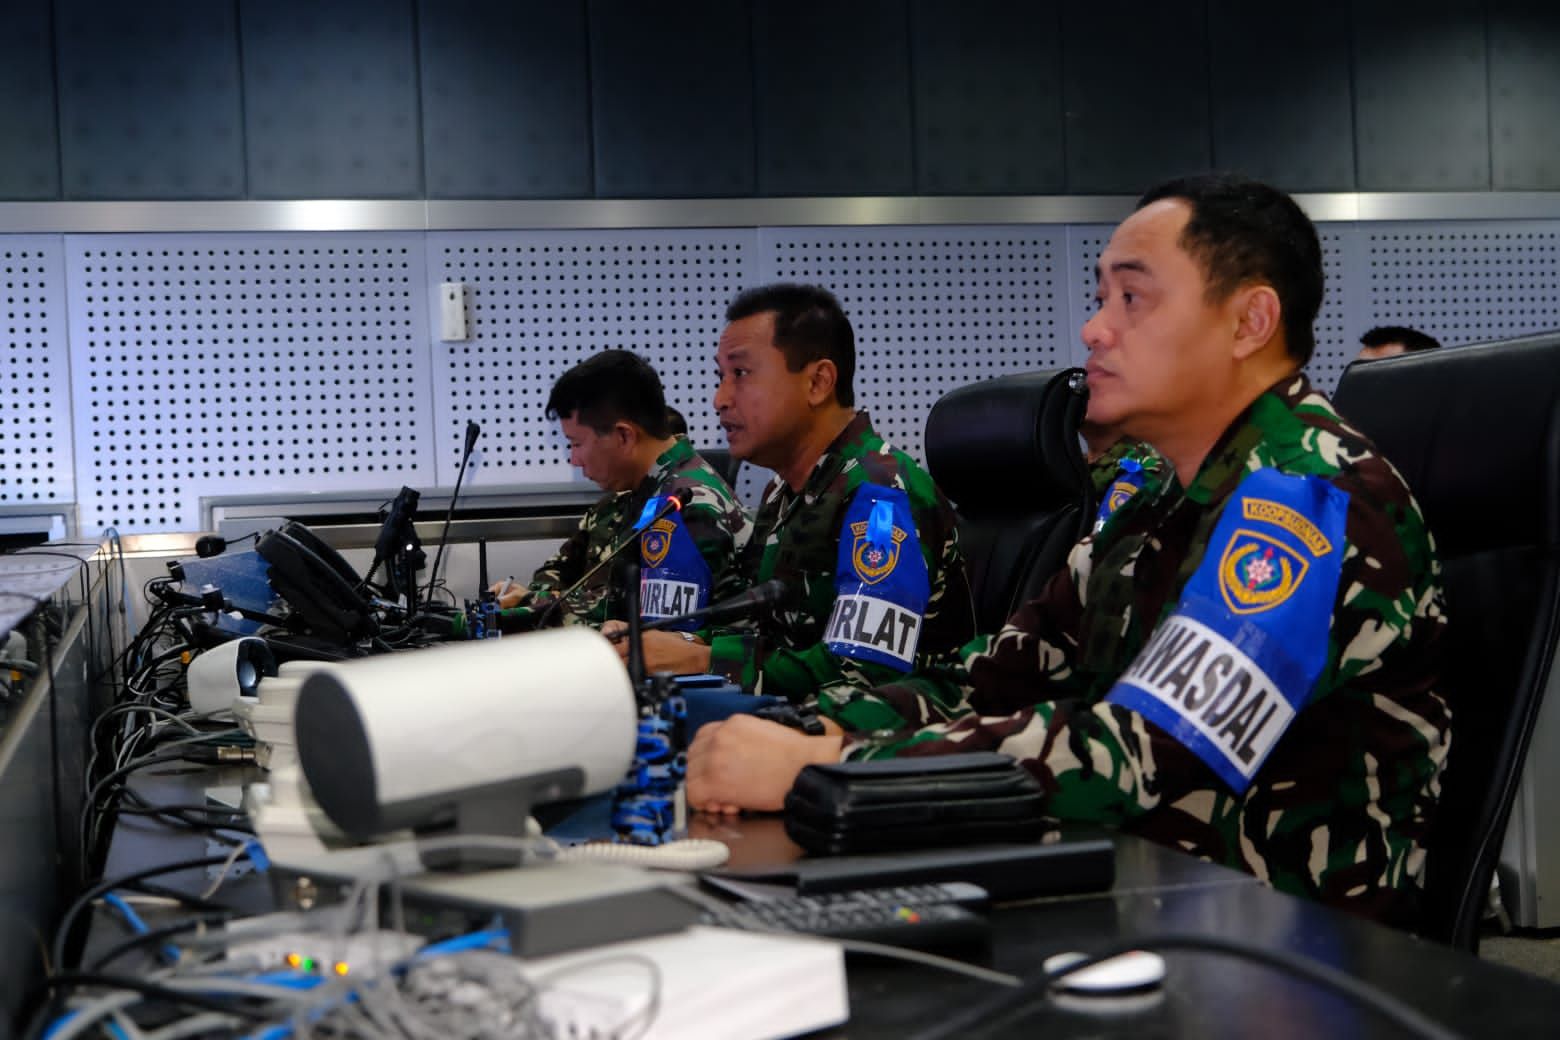 TNI AU Gelar Latihan untuk Uji Pertahanan Udara Timur Indonesia, Libatkan KRI Malahayati-362